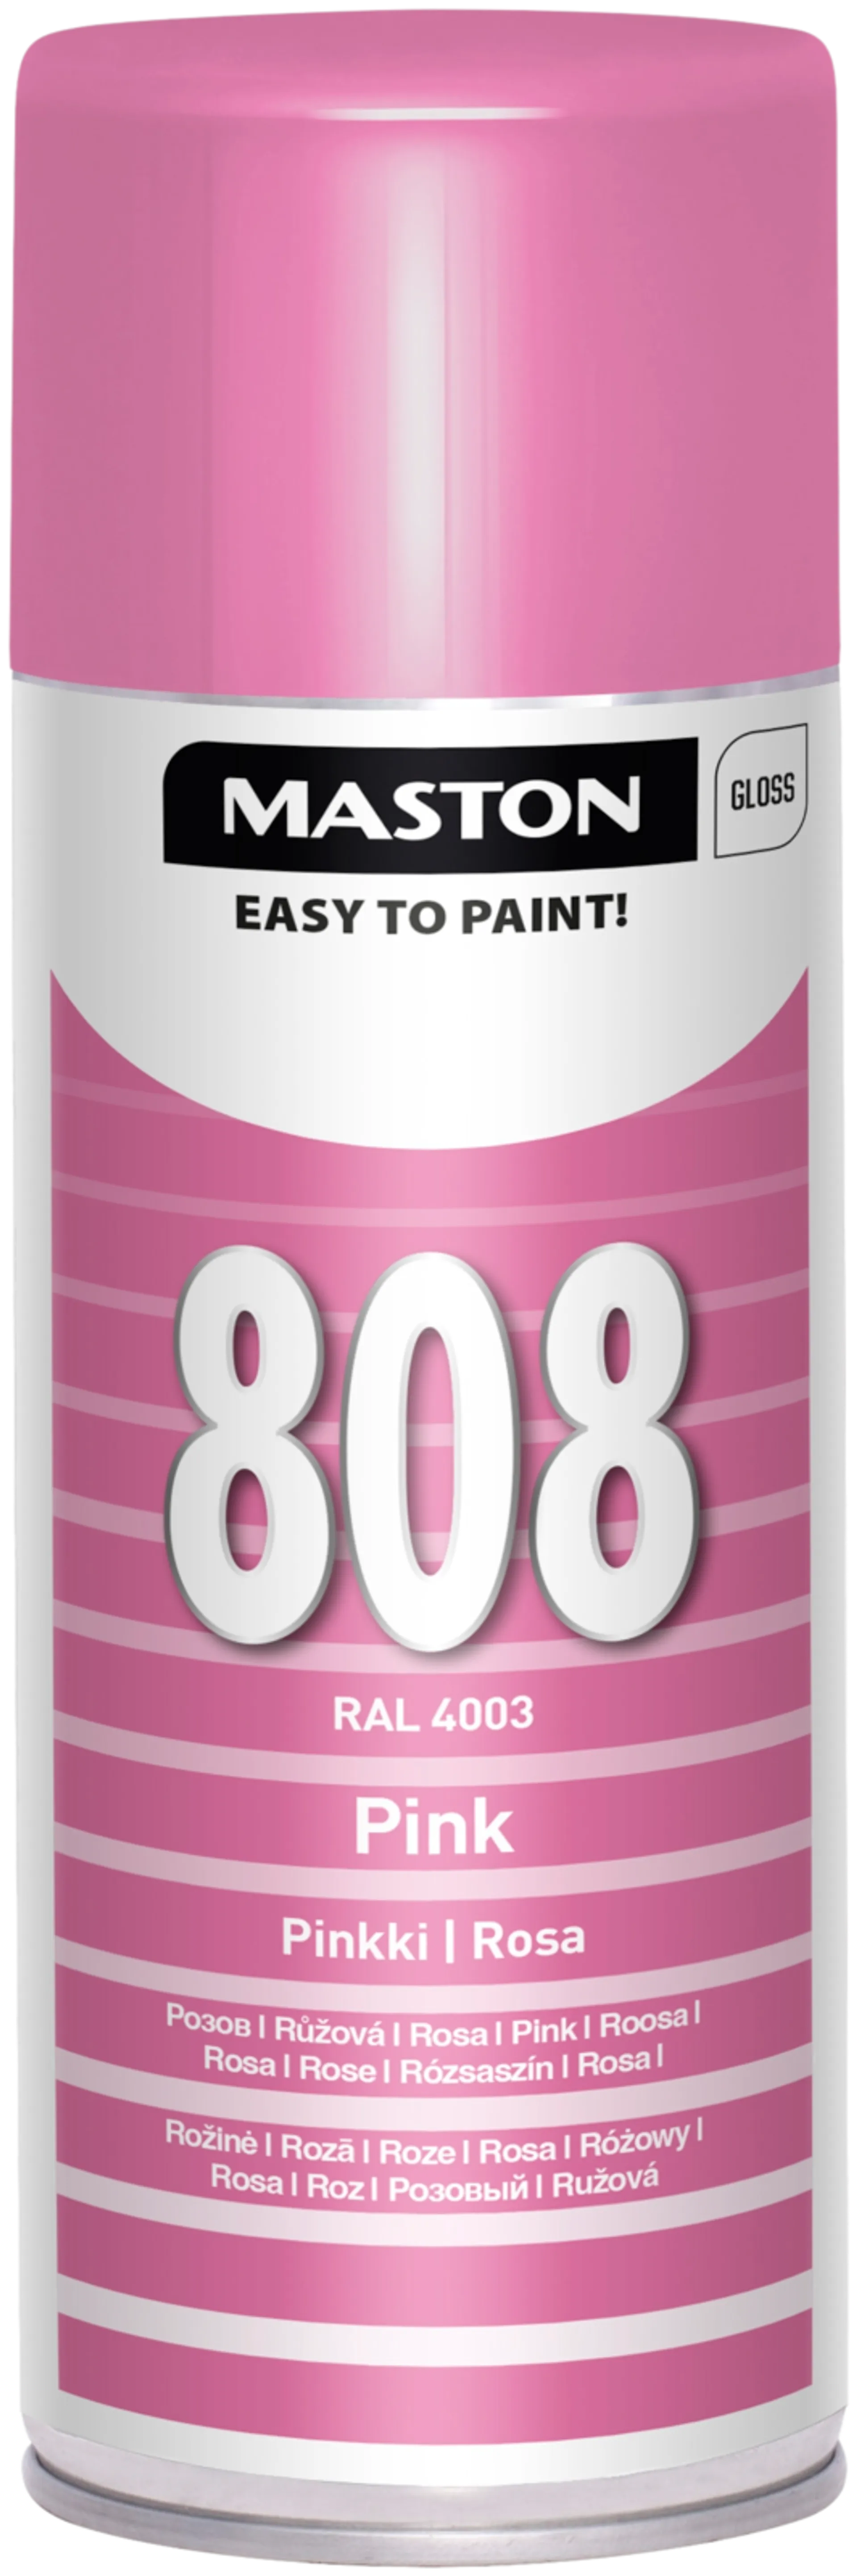 Maston ColorMix spraymaali pinkki 808 400ml RAL 4006